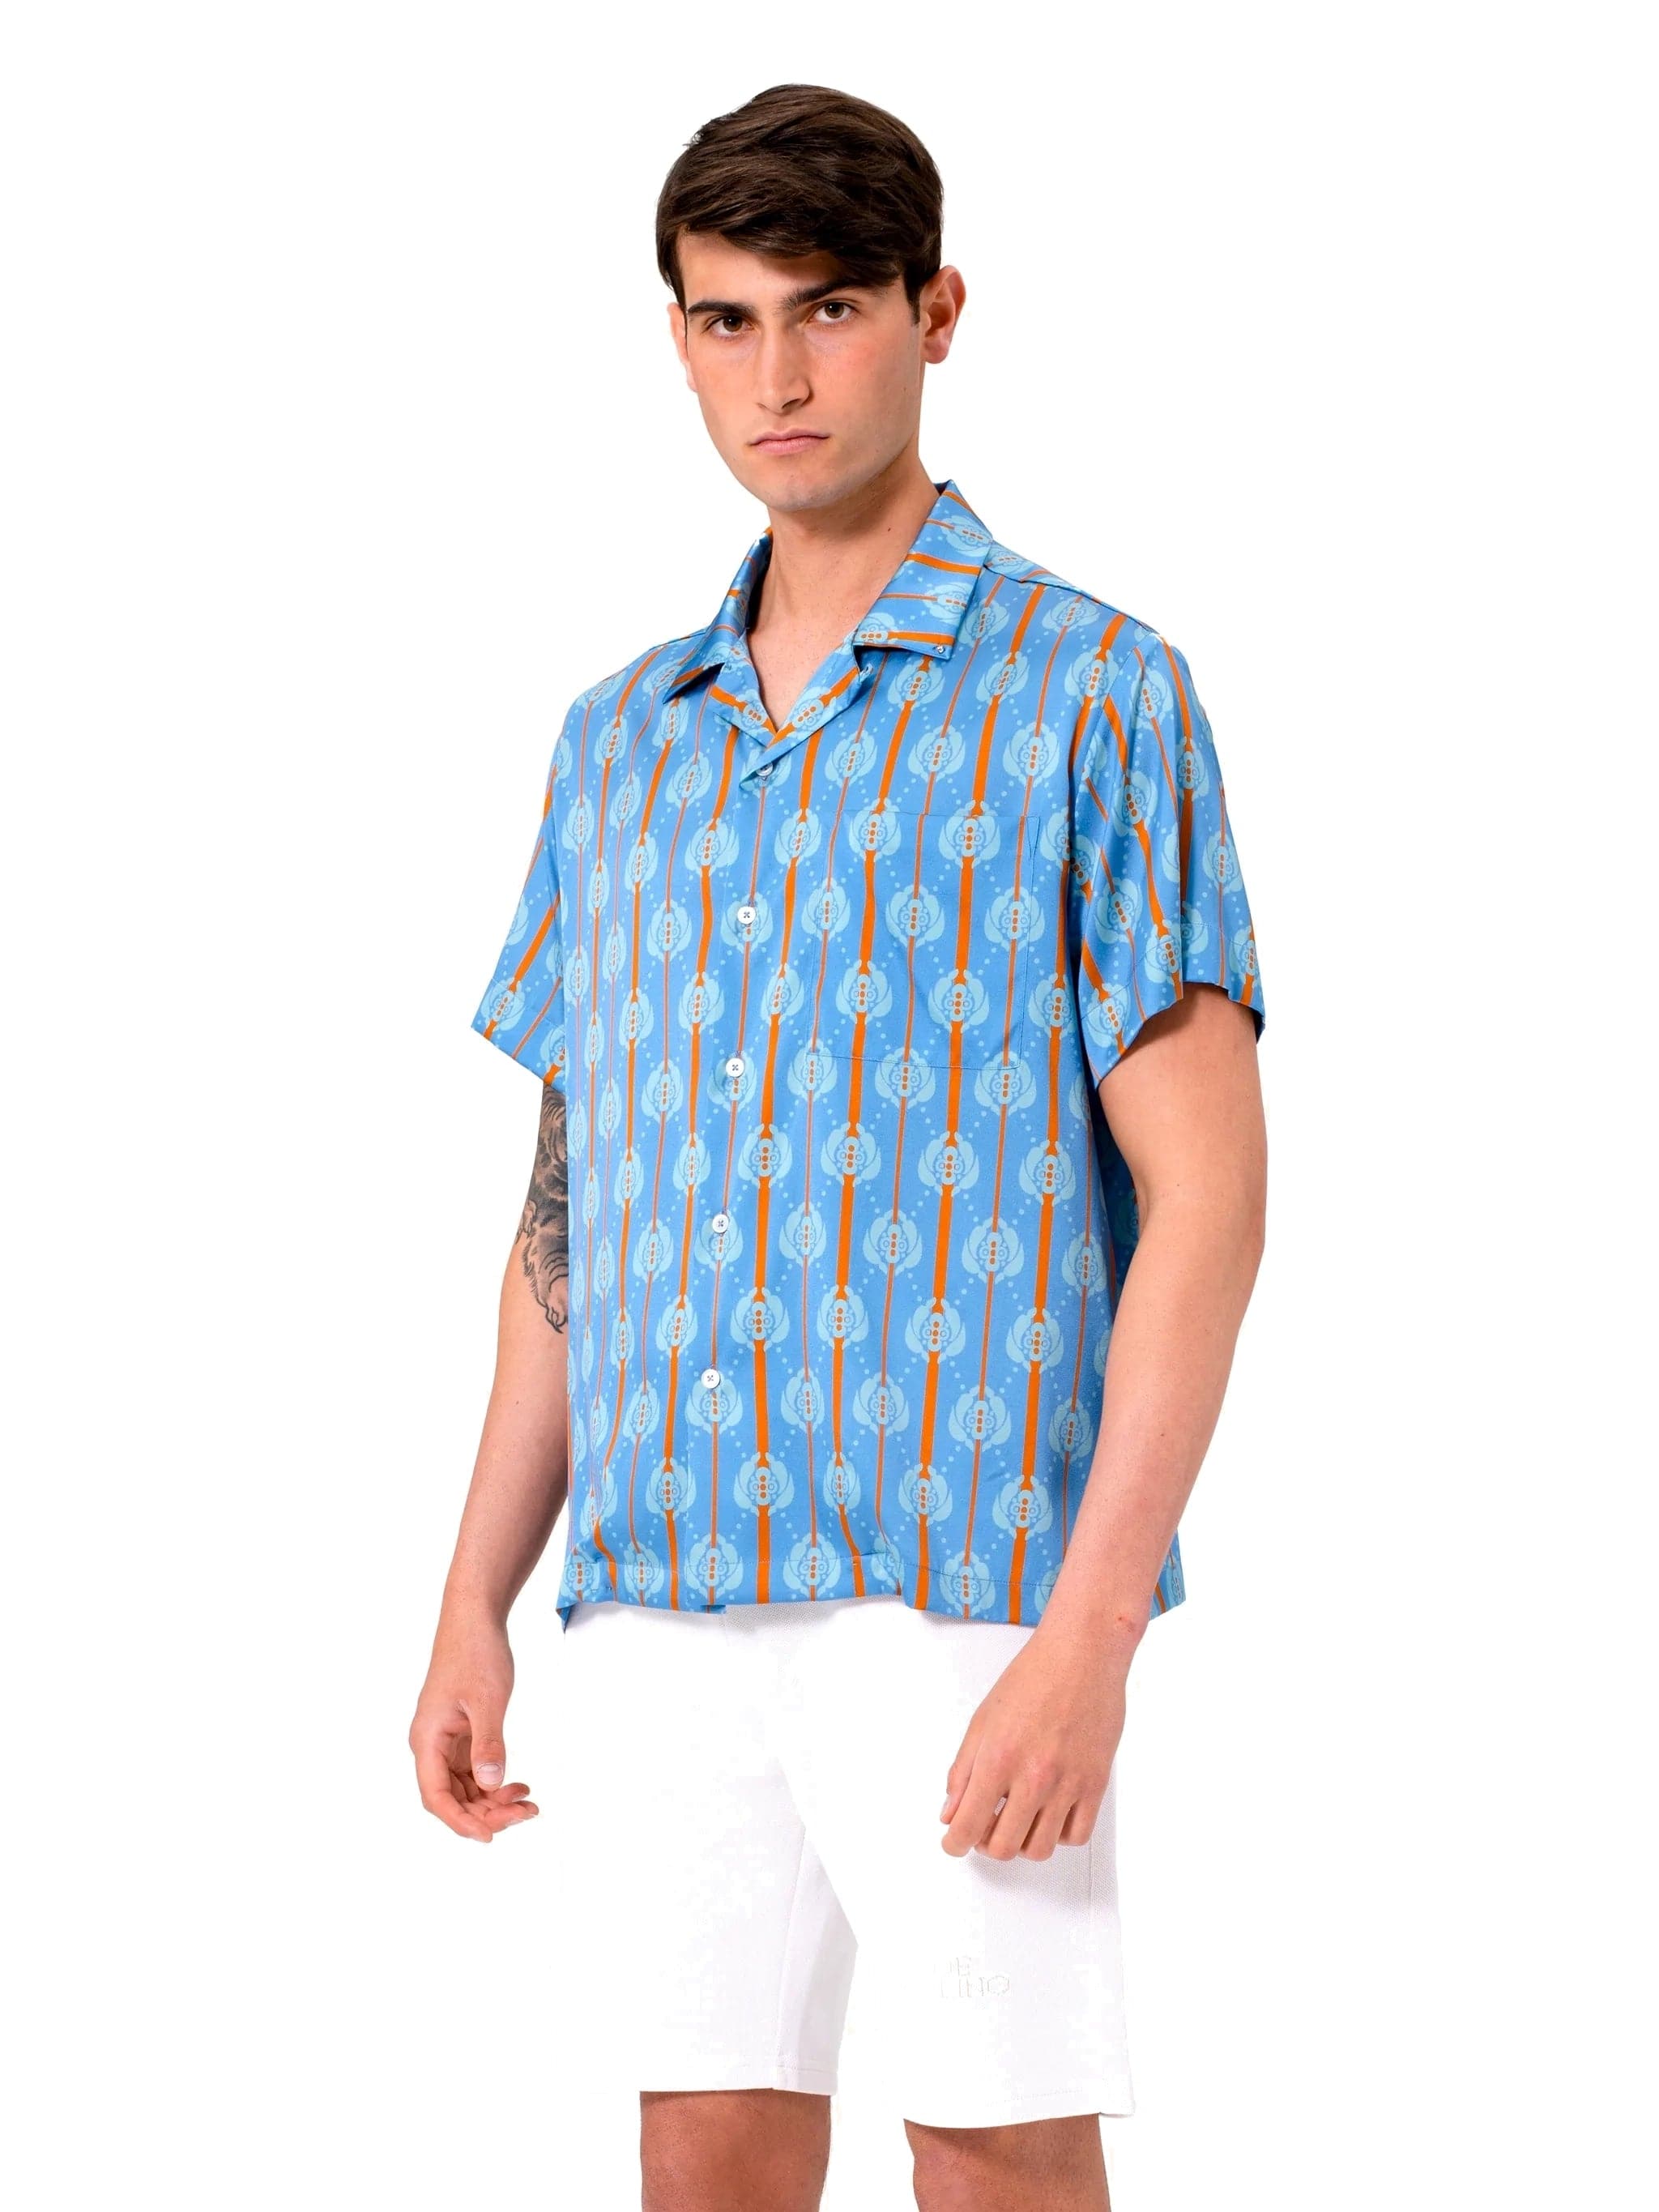 Blue and Orange Cognoscenti Silk Shirt